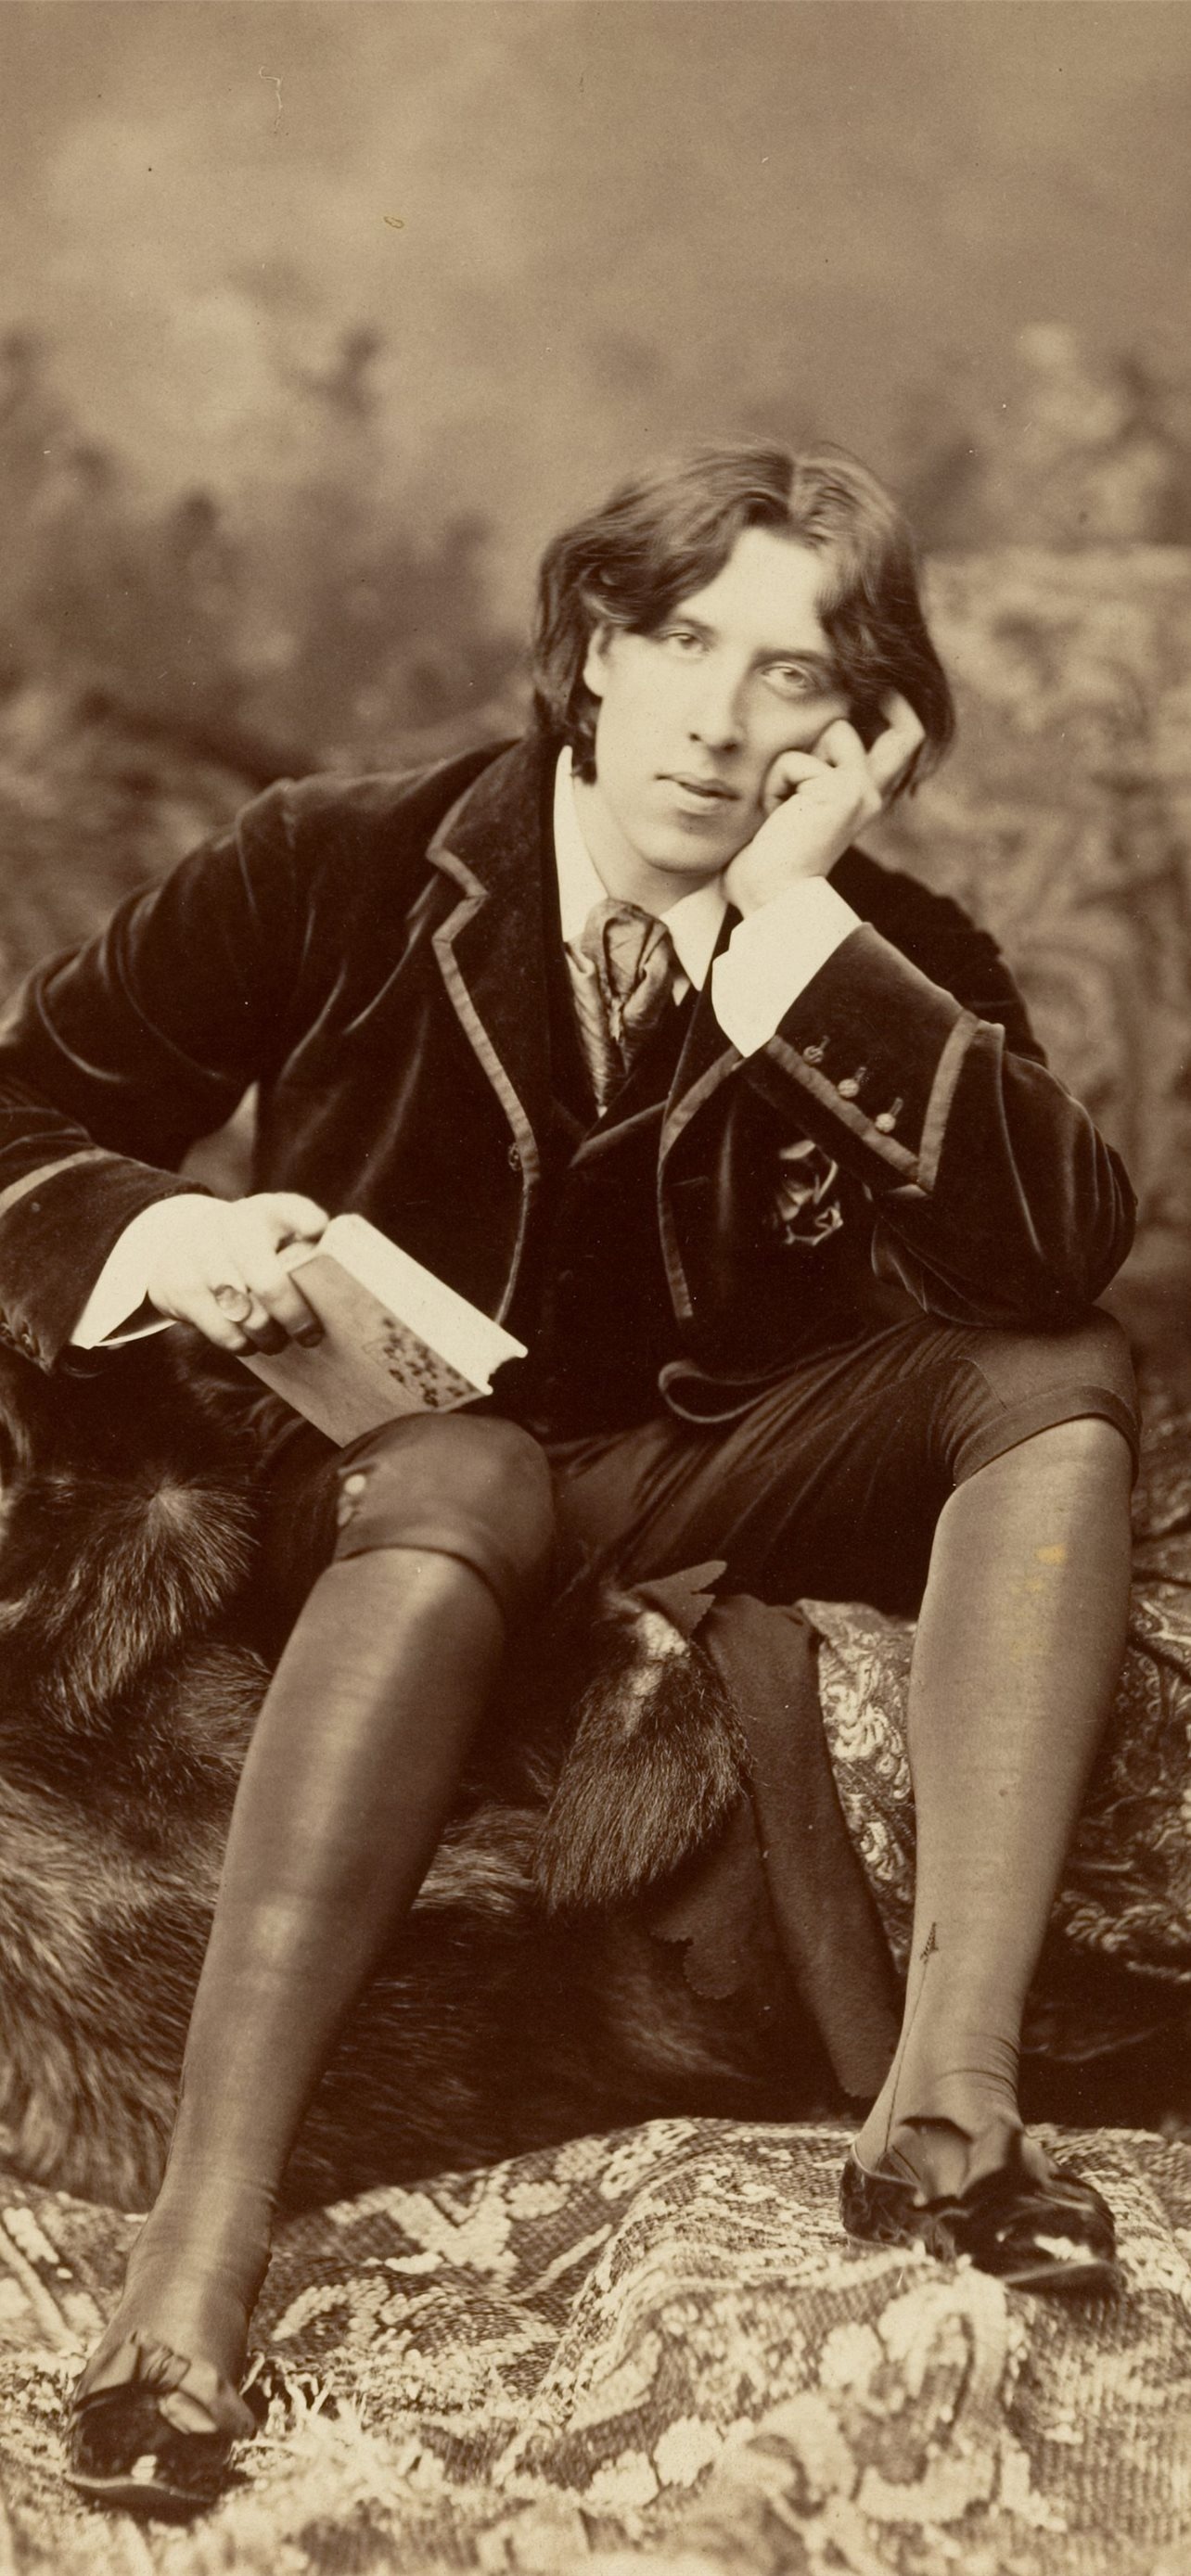 Oscar Wilde, iPhone wallpapers, Free download, Artistic designs, 1290x2780 HD Handy